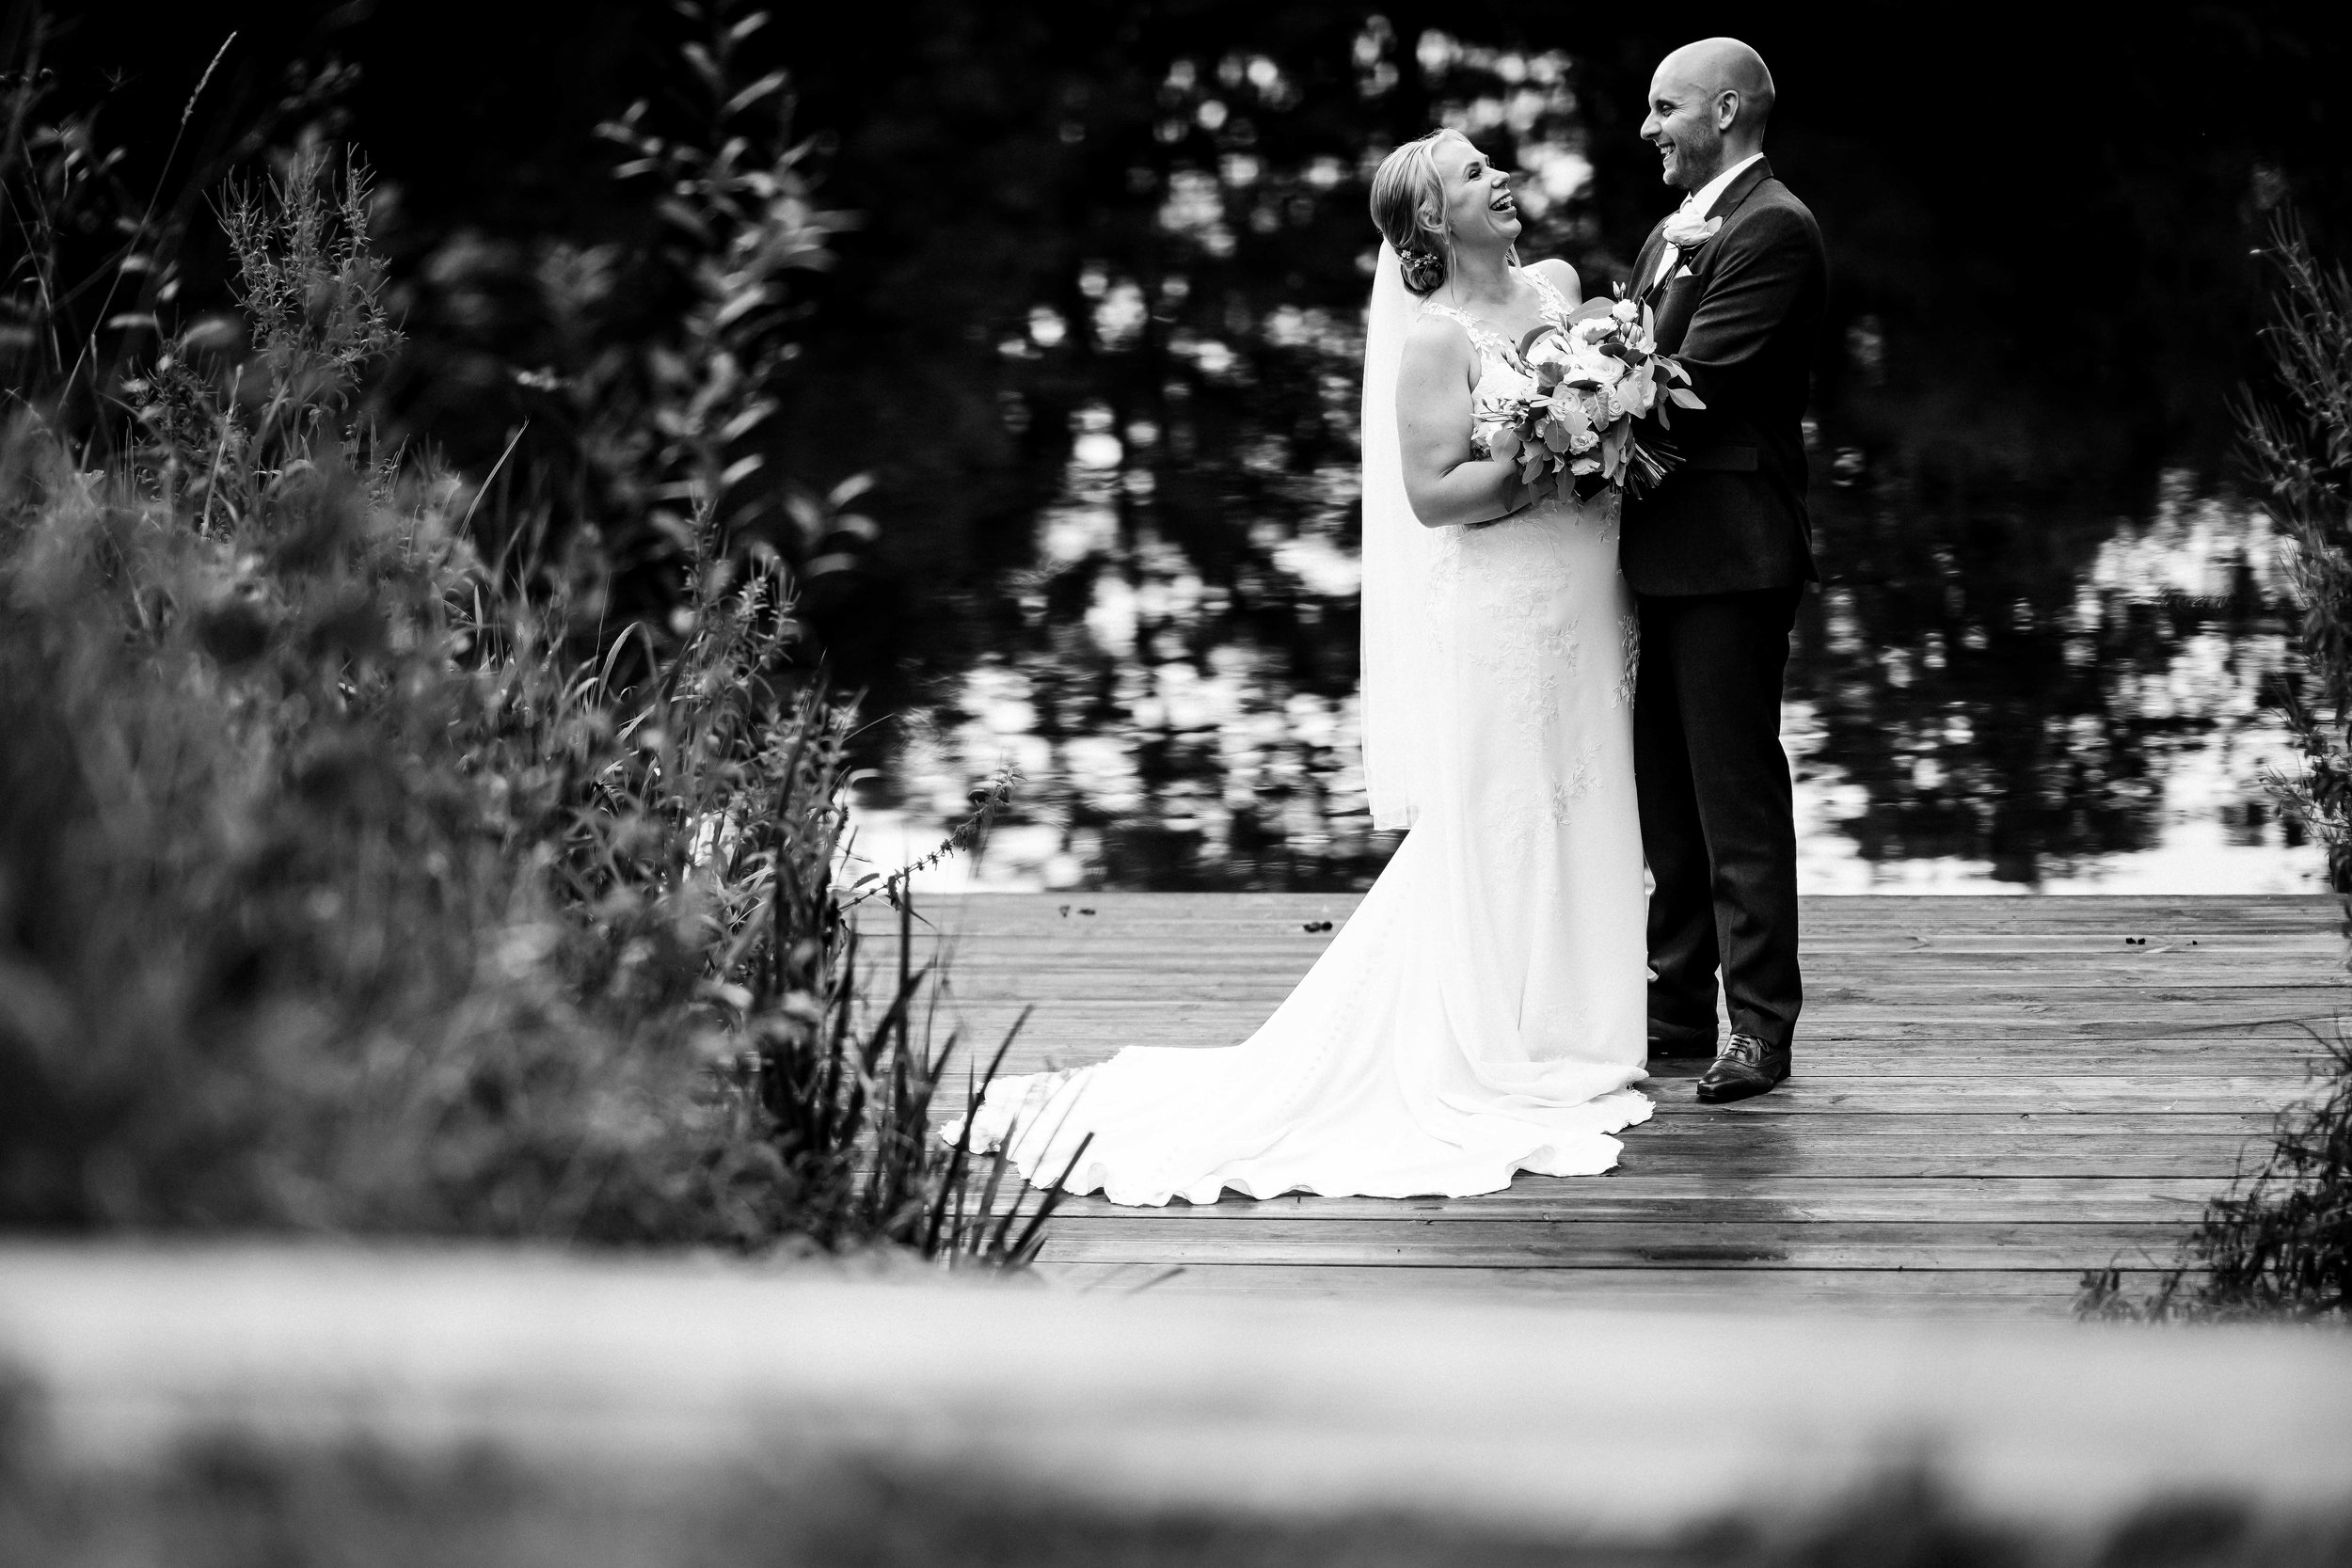 Styal Lodge wedding photography cheshire - 041.jpg